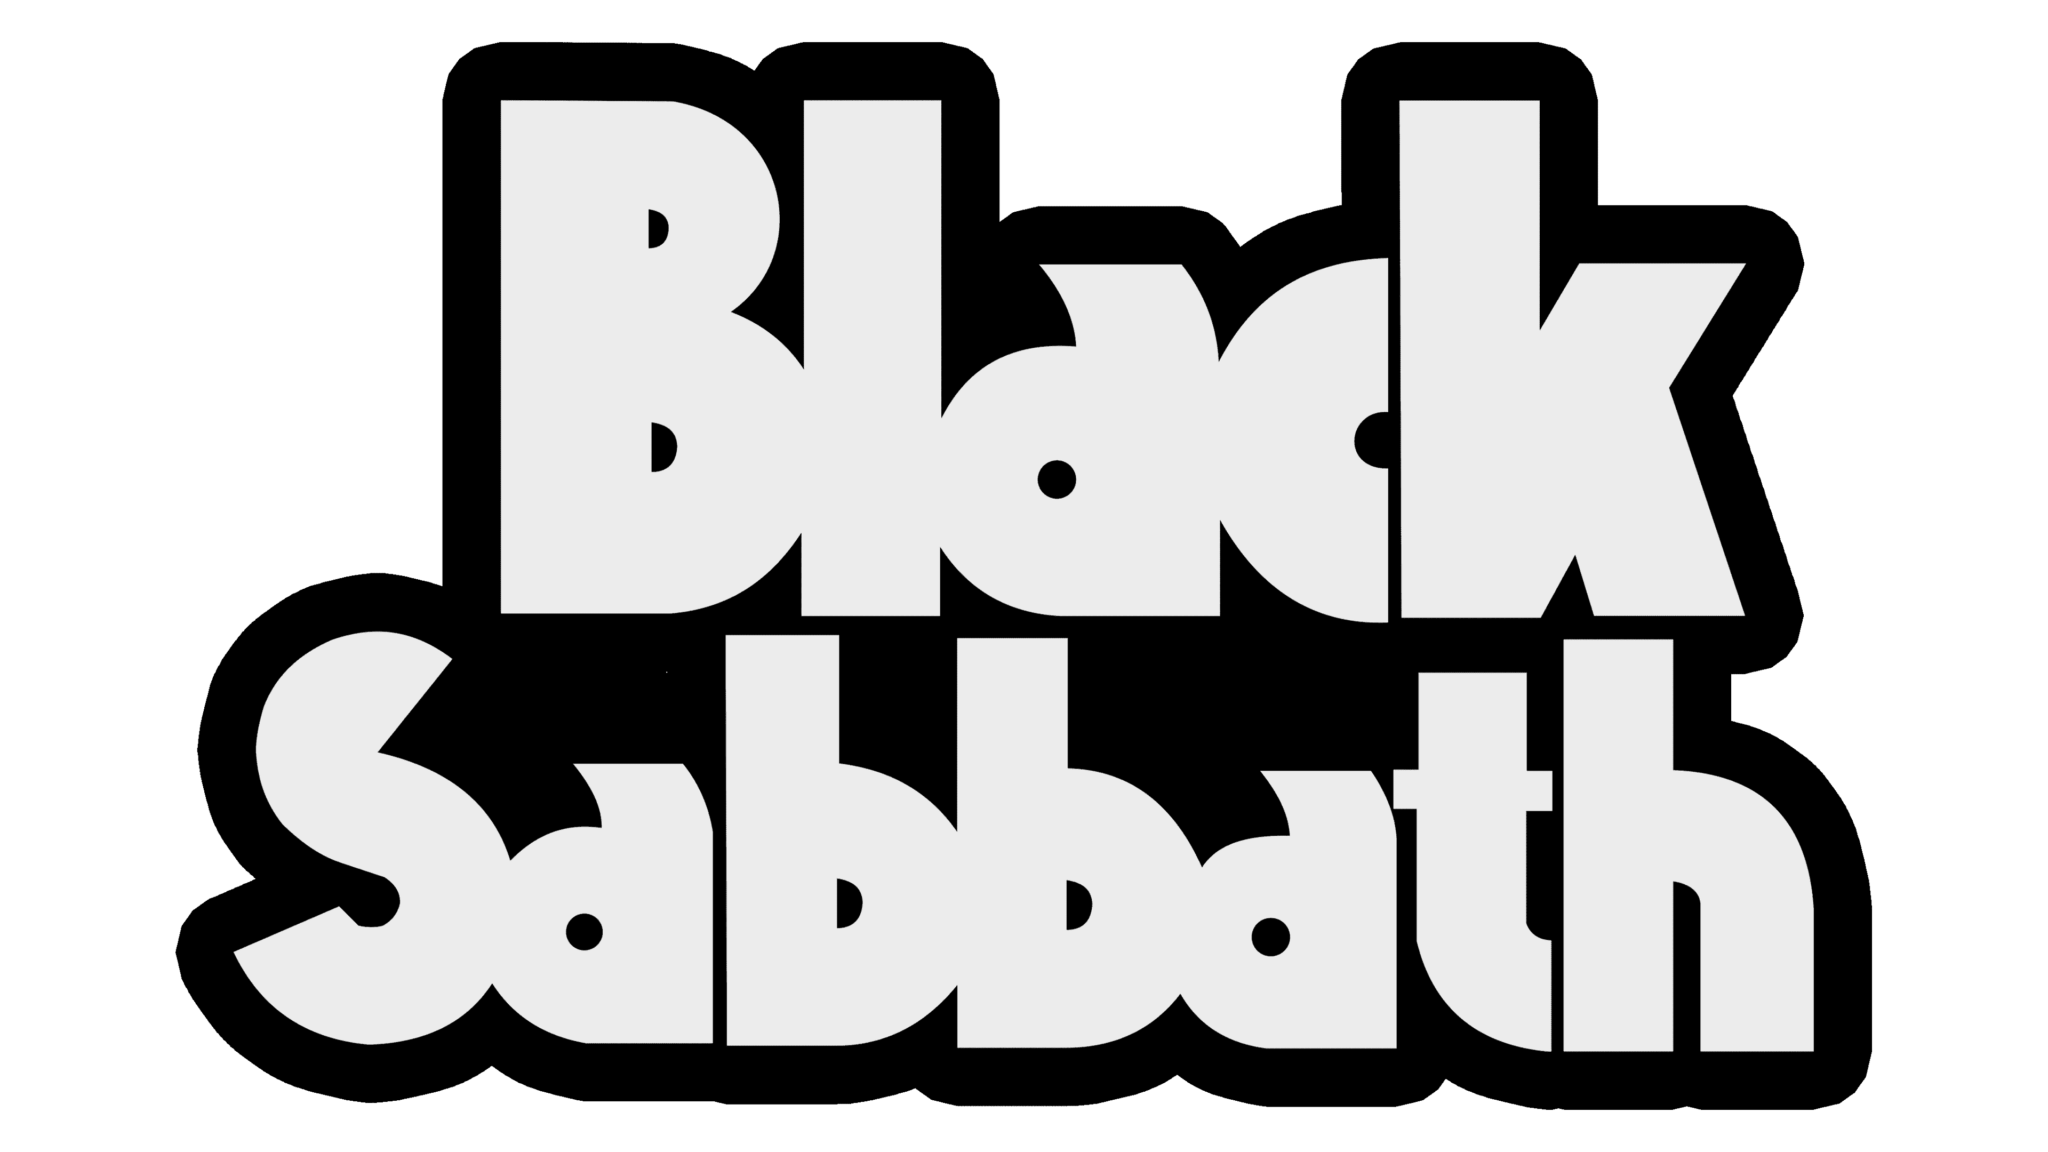 black sabbath logo png image